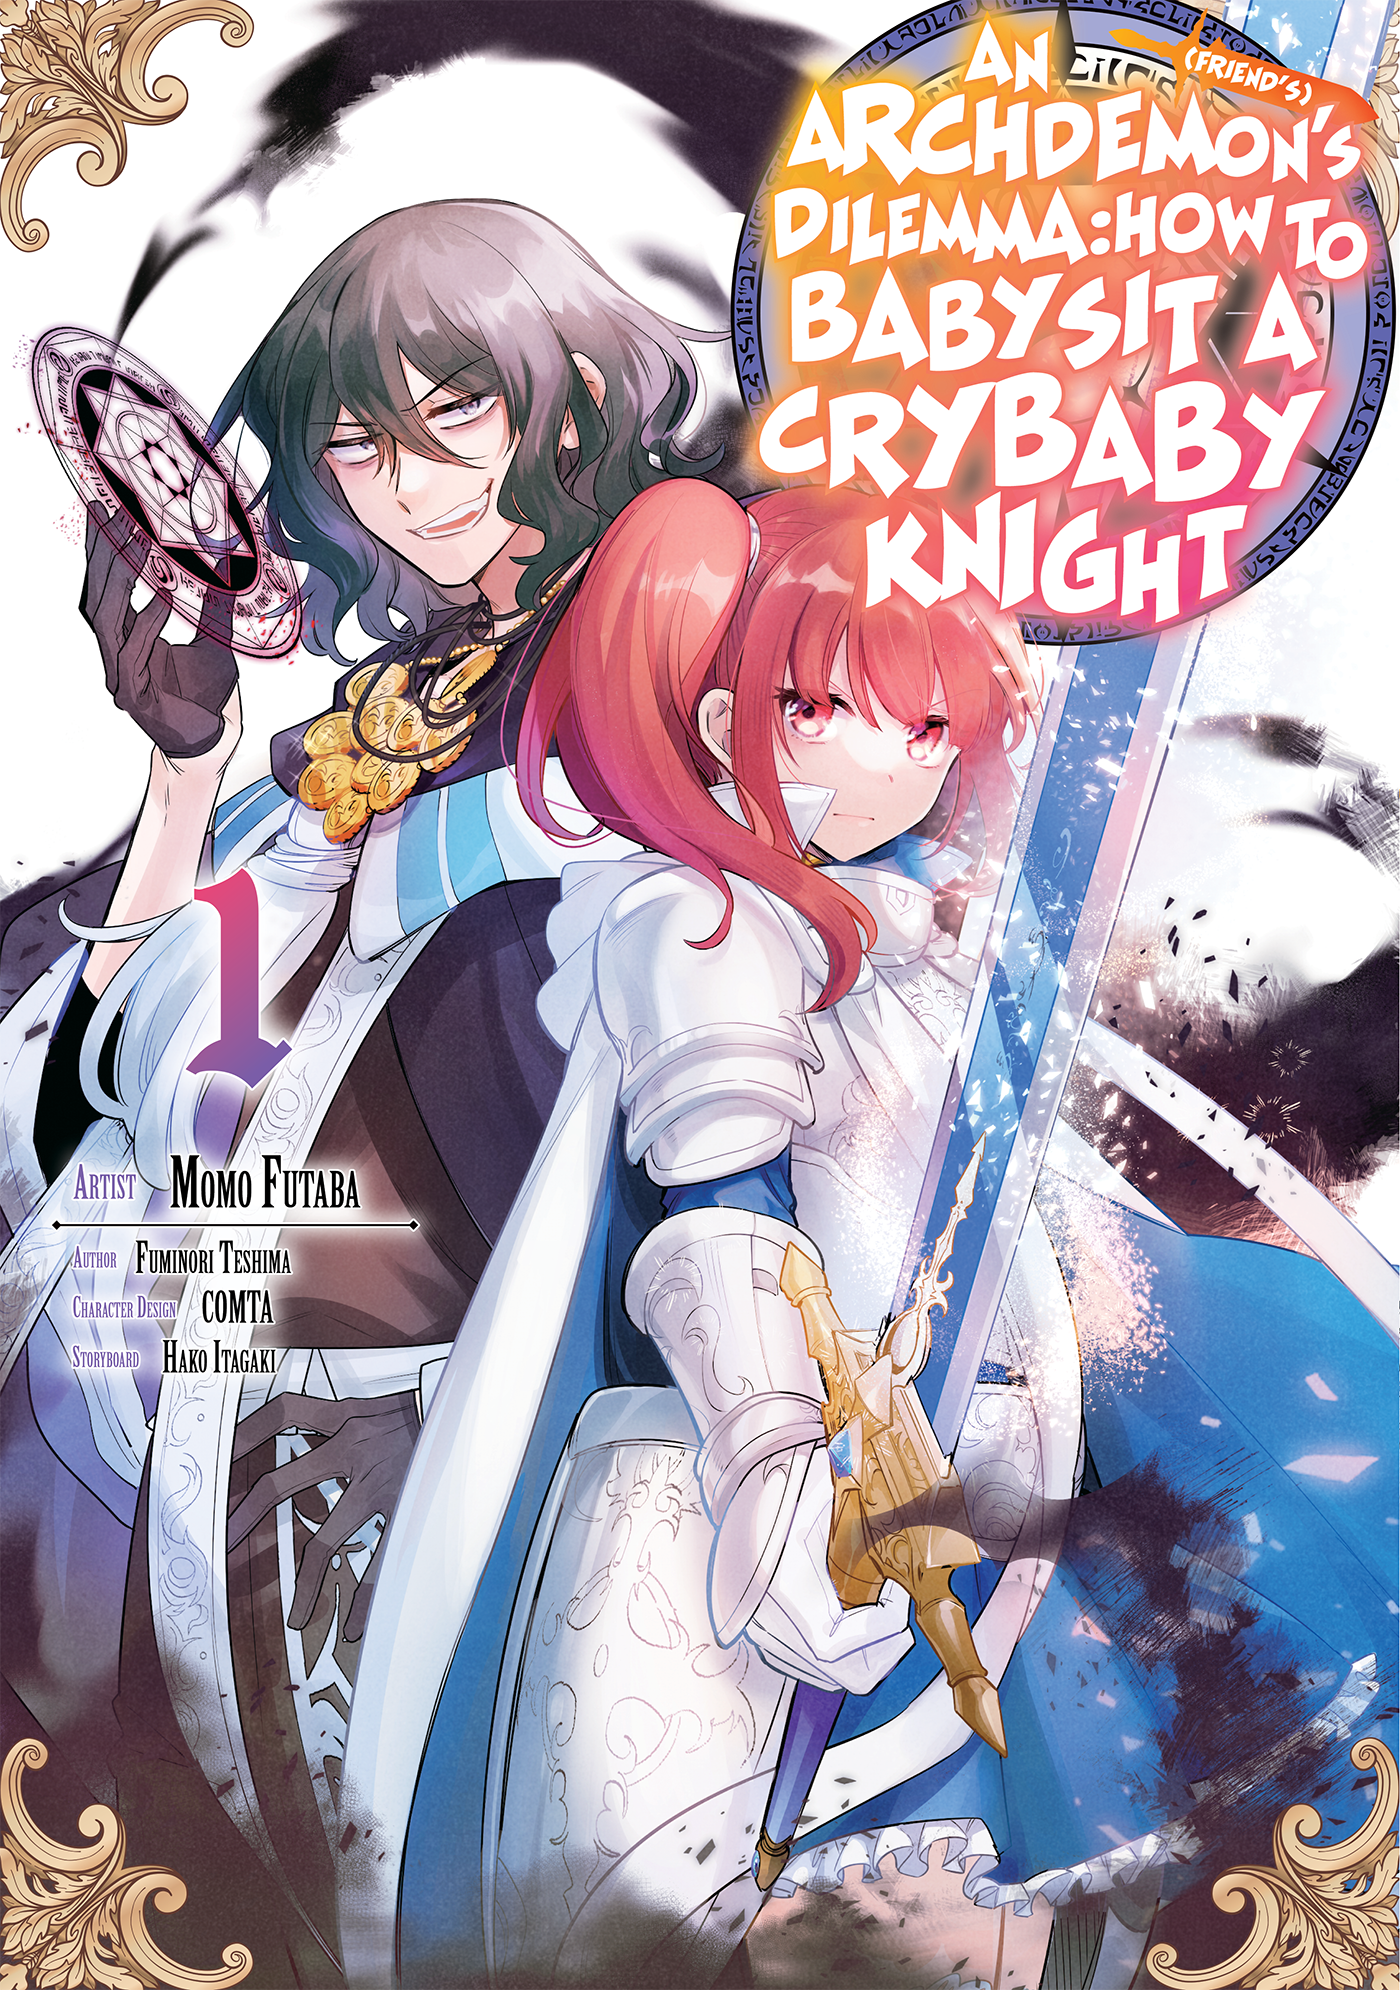 An Archdemon’s (Friend’s) Dilemma: How to Love a Crybaby Knight (Manga) by Momo Futaba (Art), Fuminori Teshima (Story), Hako Itagaki (Character Designs)